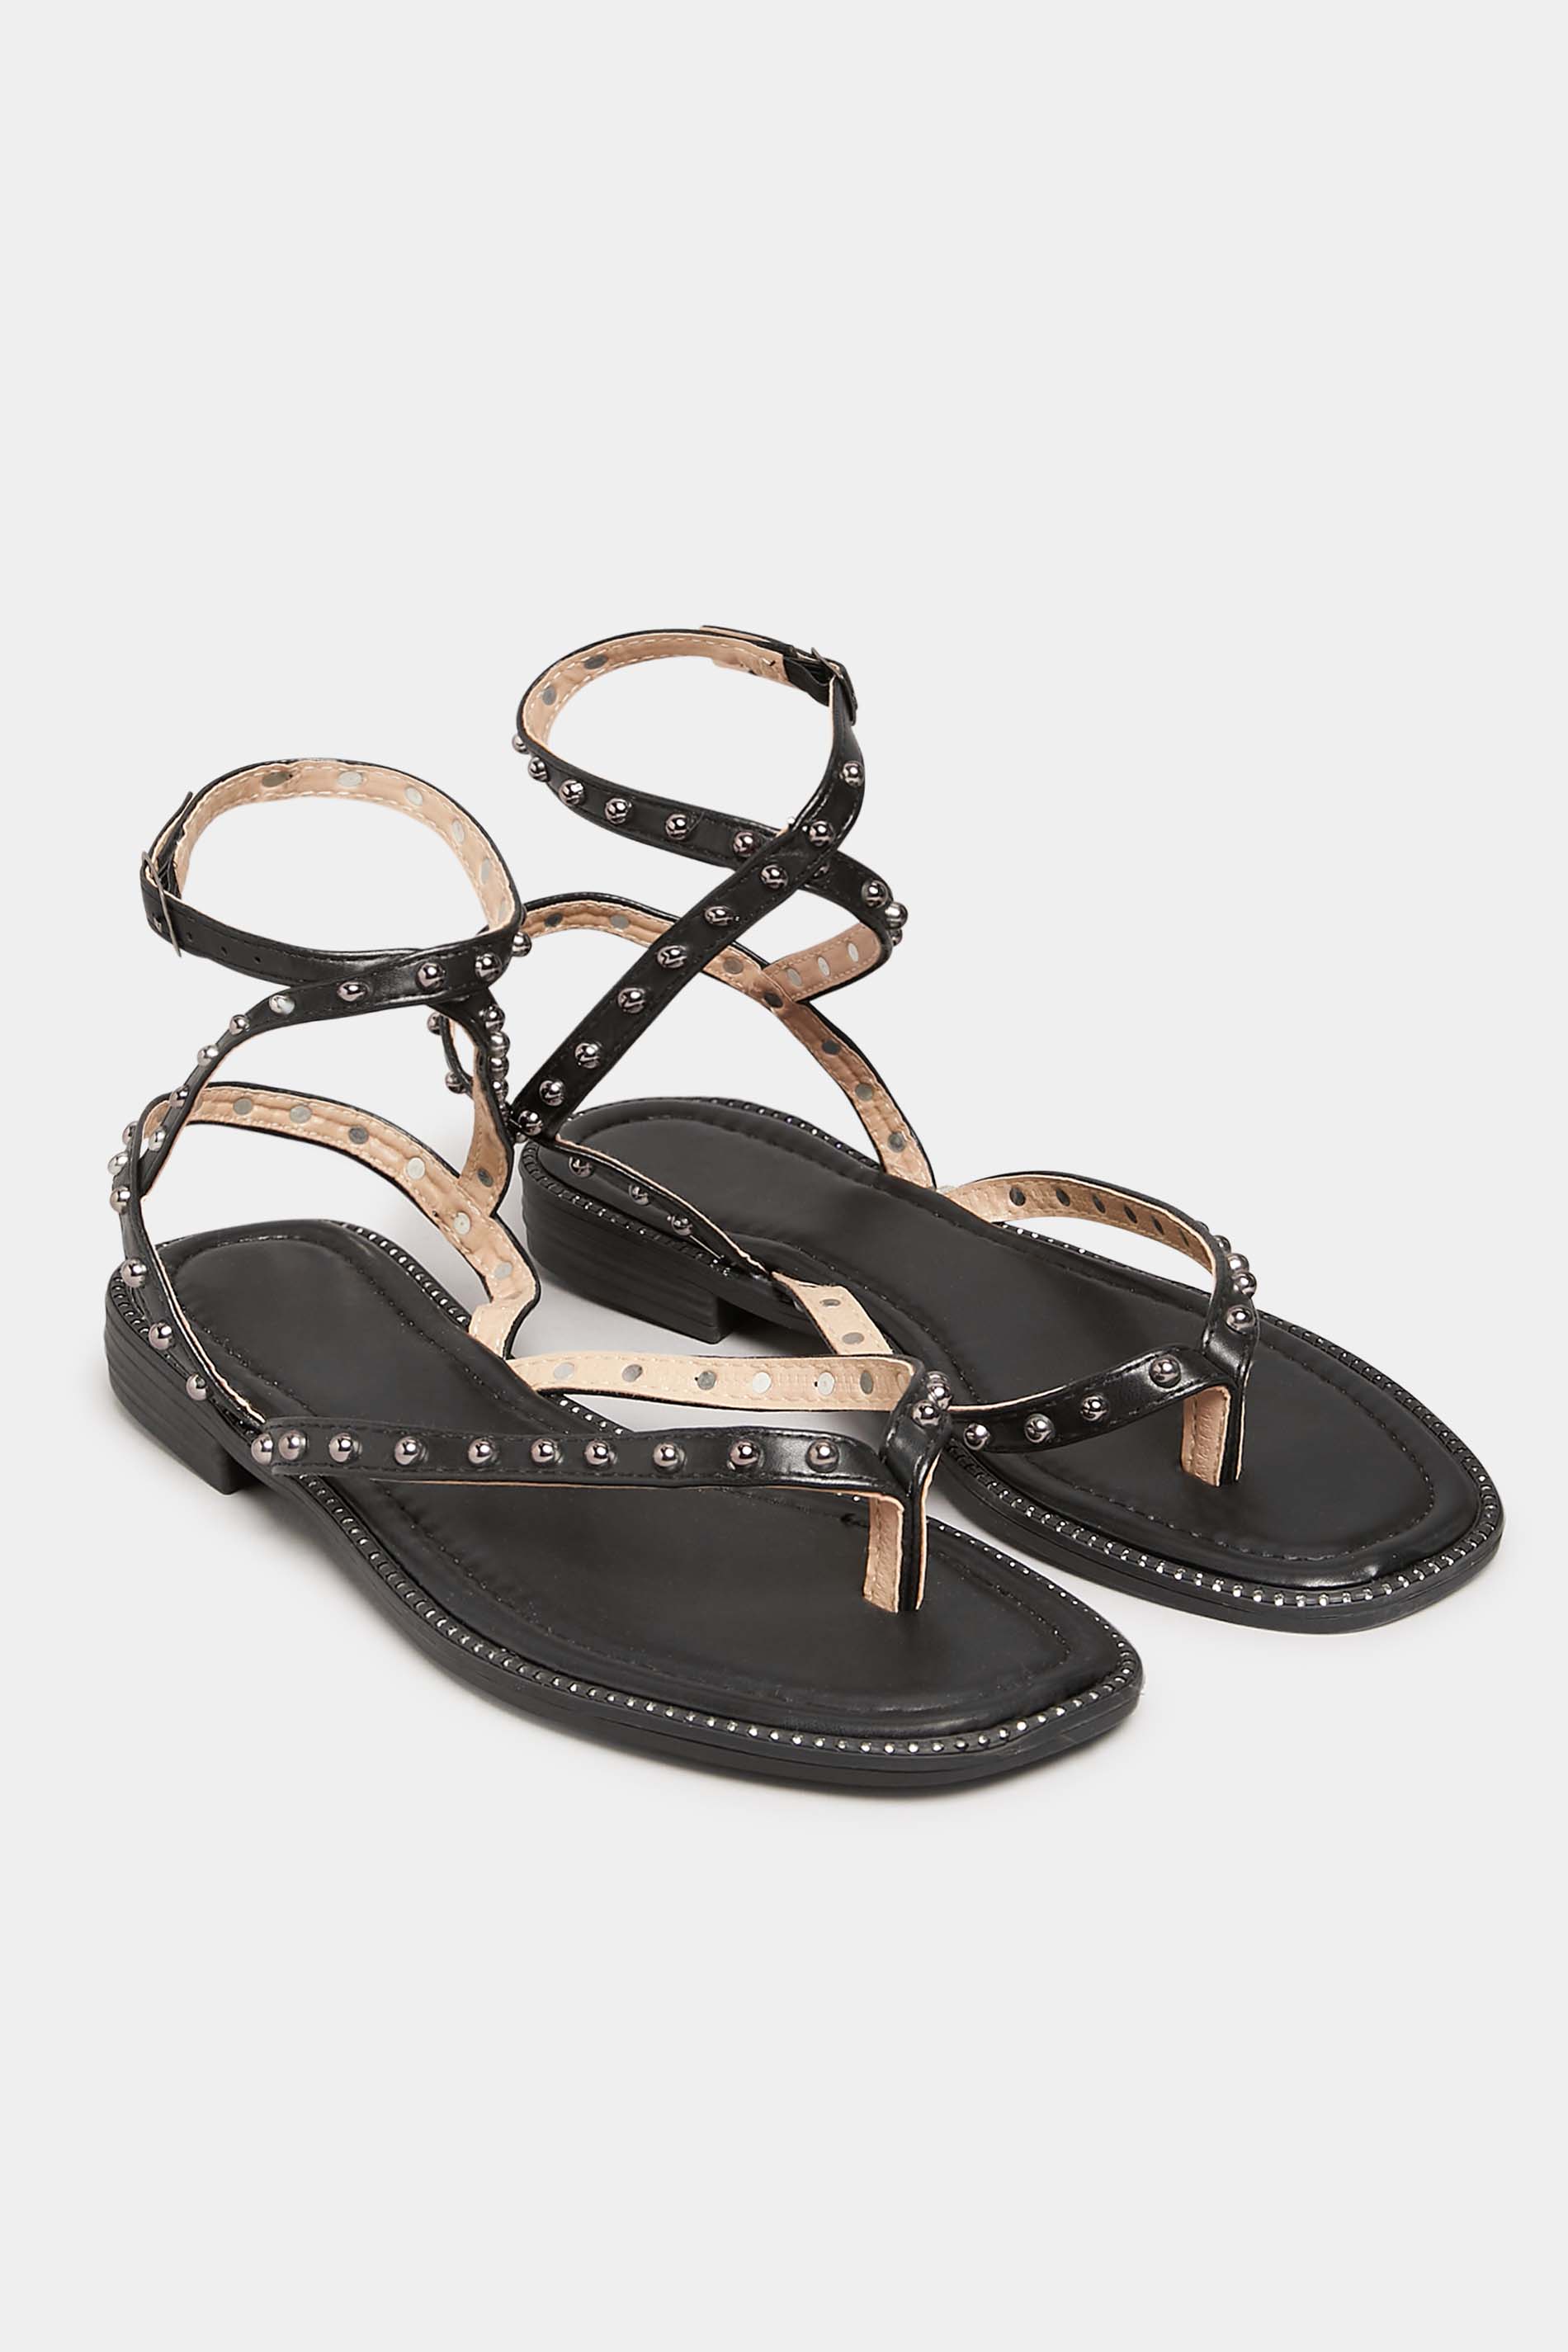 Grande taille  Shoes Grande taille  Sandals | PixieGirl Black Studded Strap Sandals In Standard D Fit - RD23530